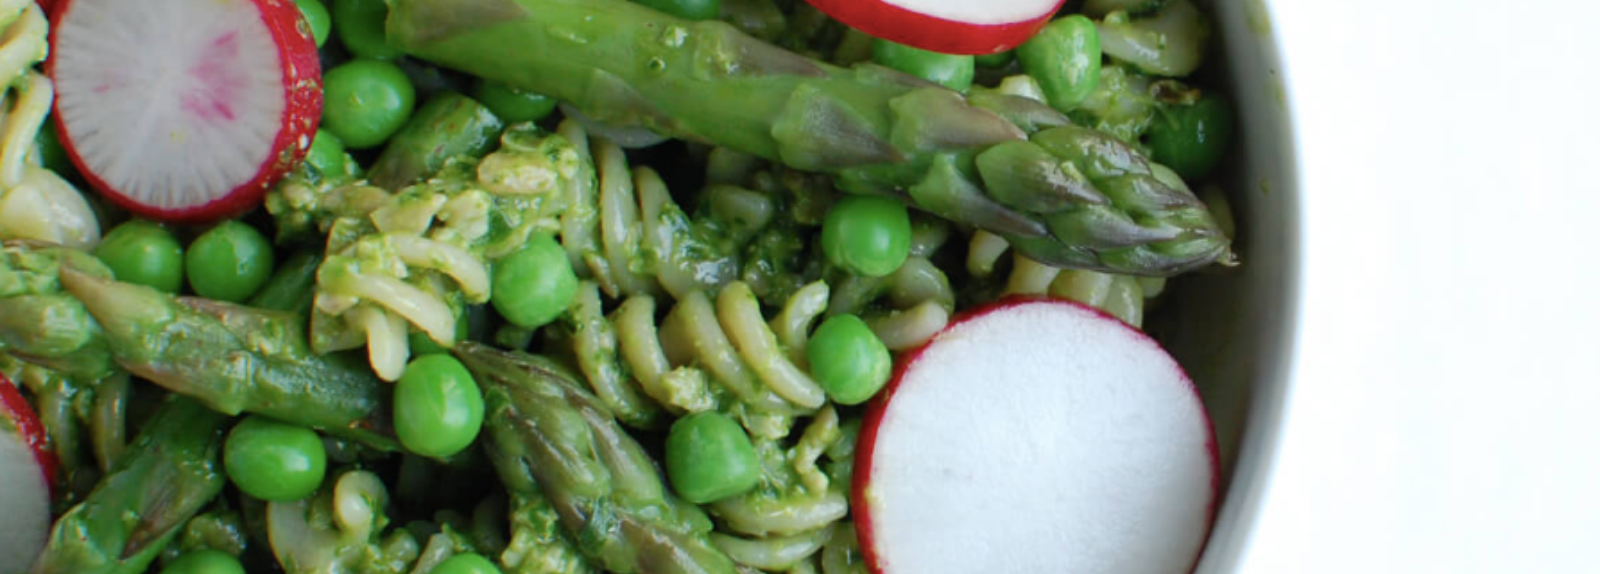 Spring Vegetable Pasta Salad